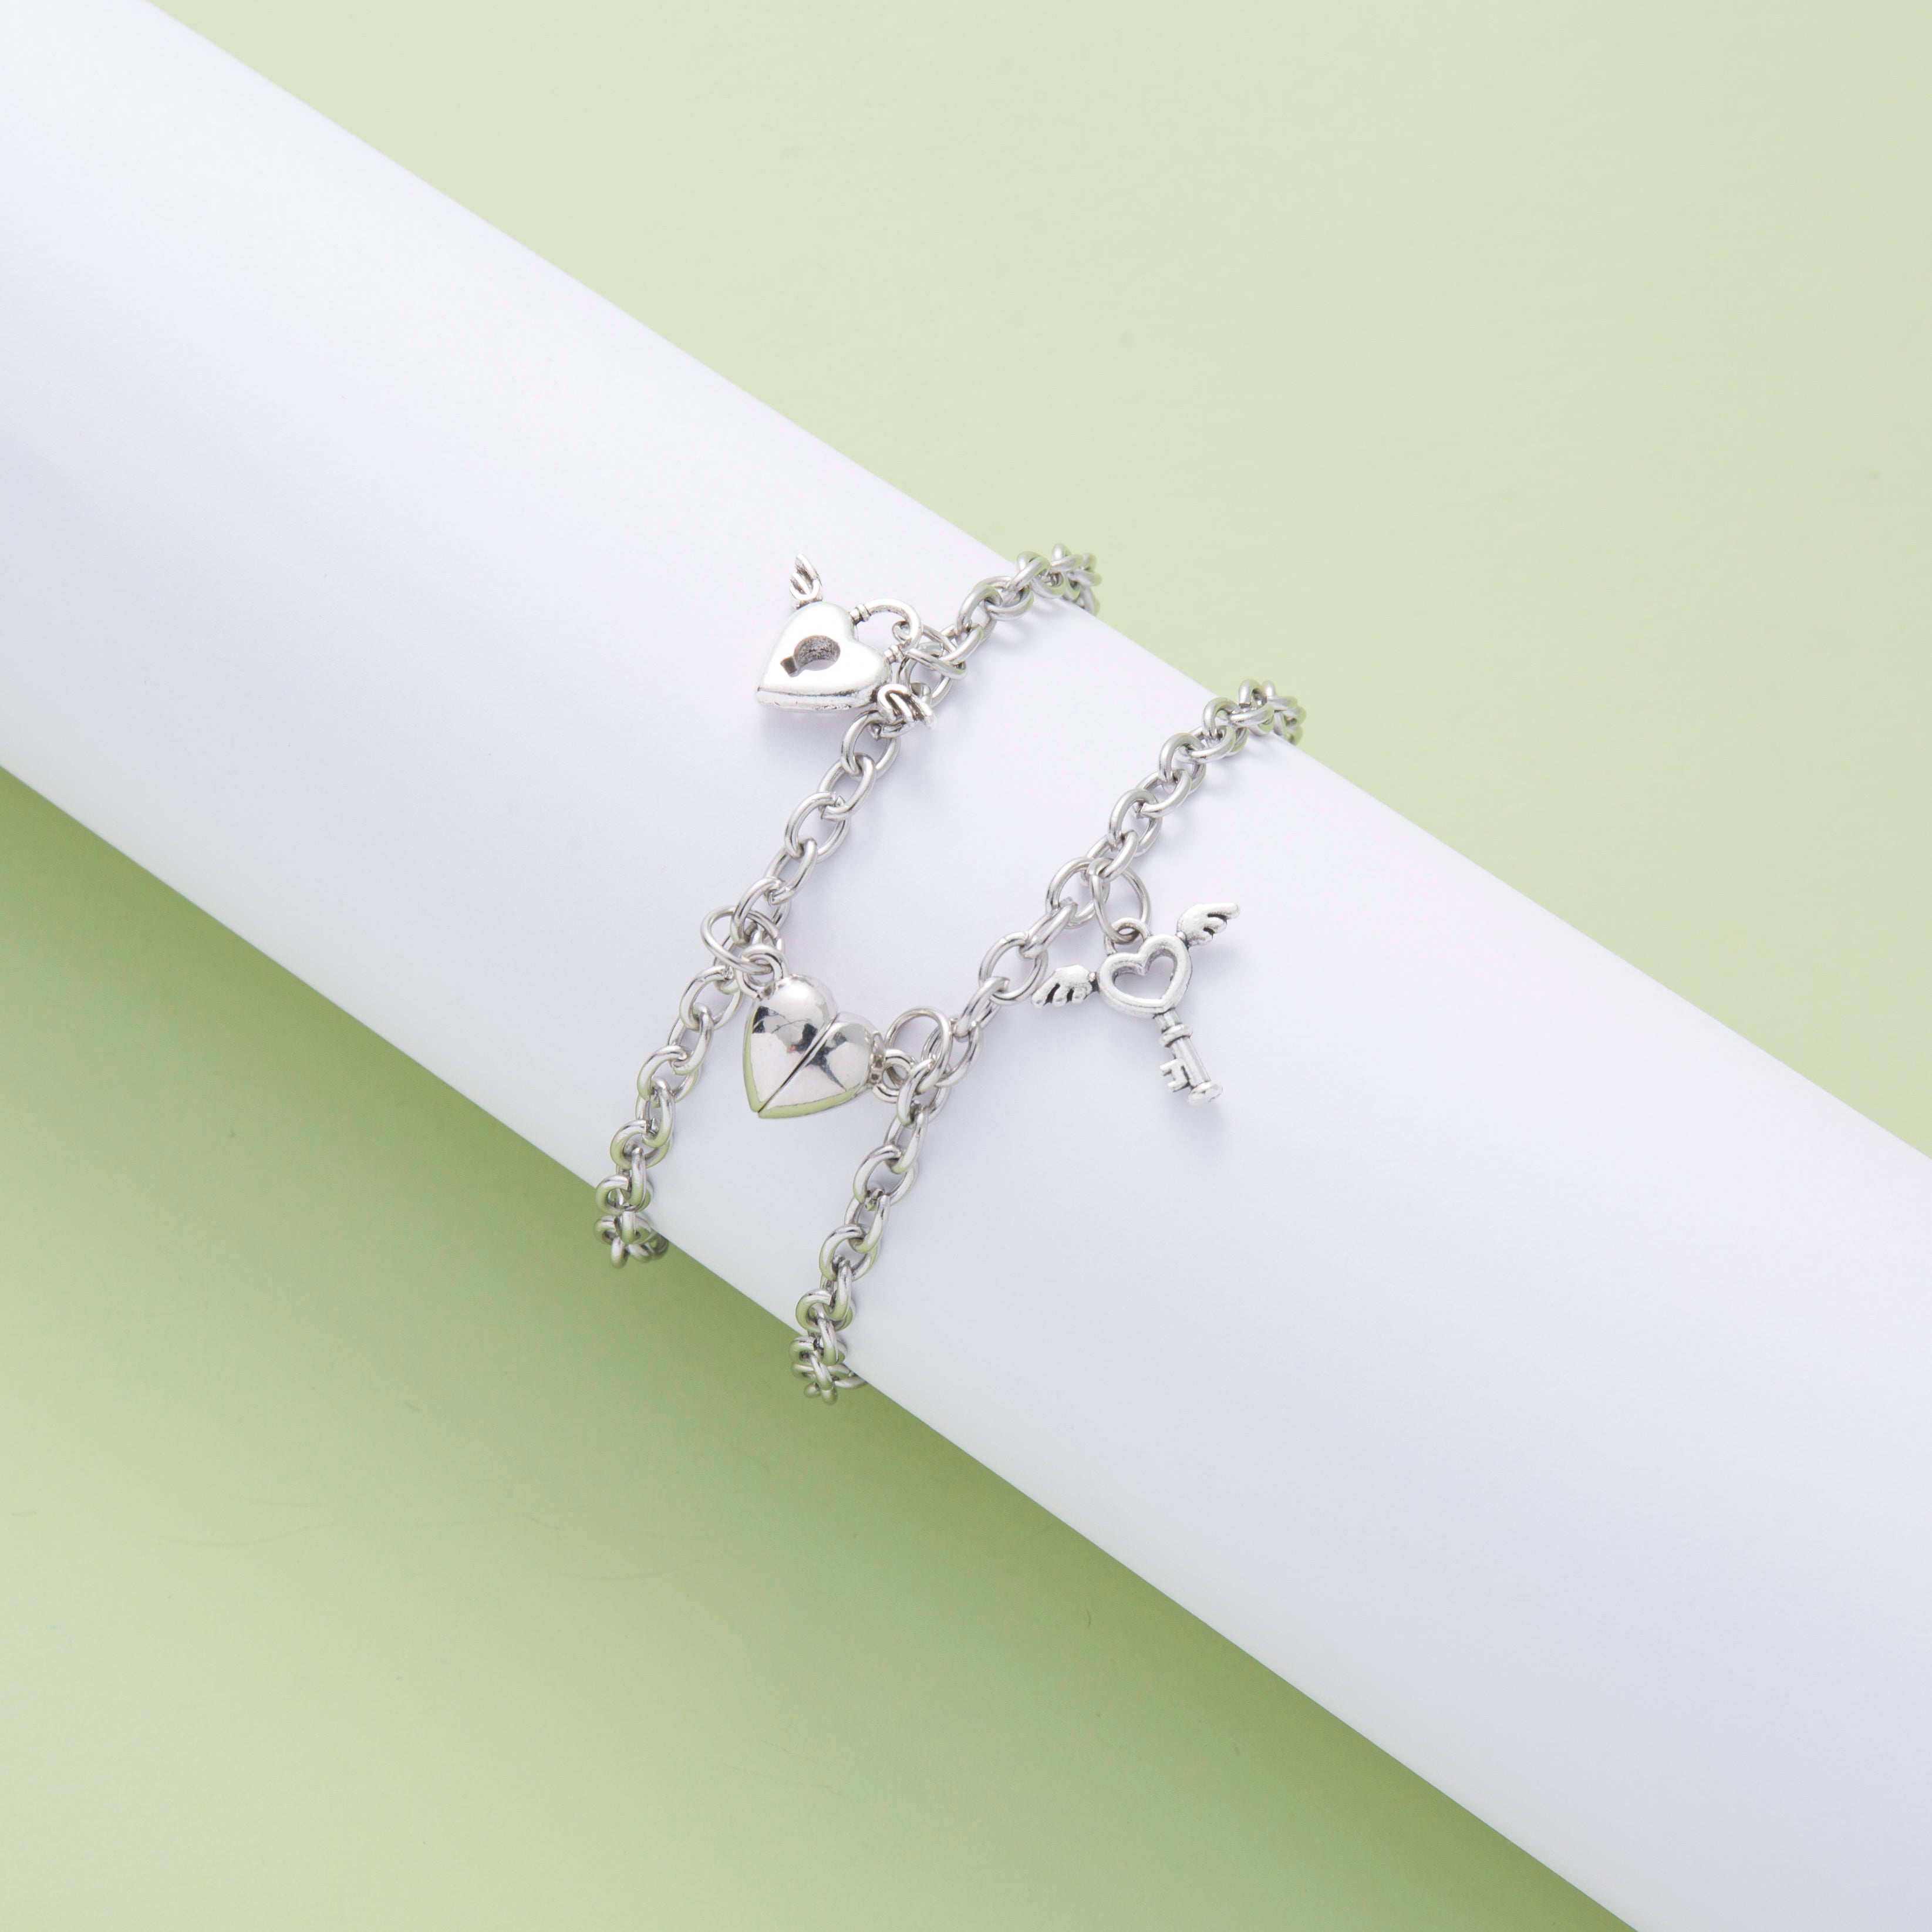 Yesbay 1Pc Key Lock Heart Charm Pendant Couple Bracelet Chain Bangle  Jewelry-White - Walmart.com